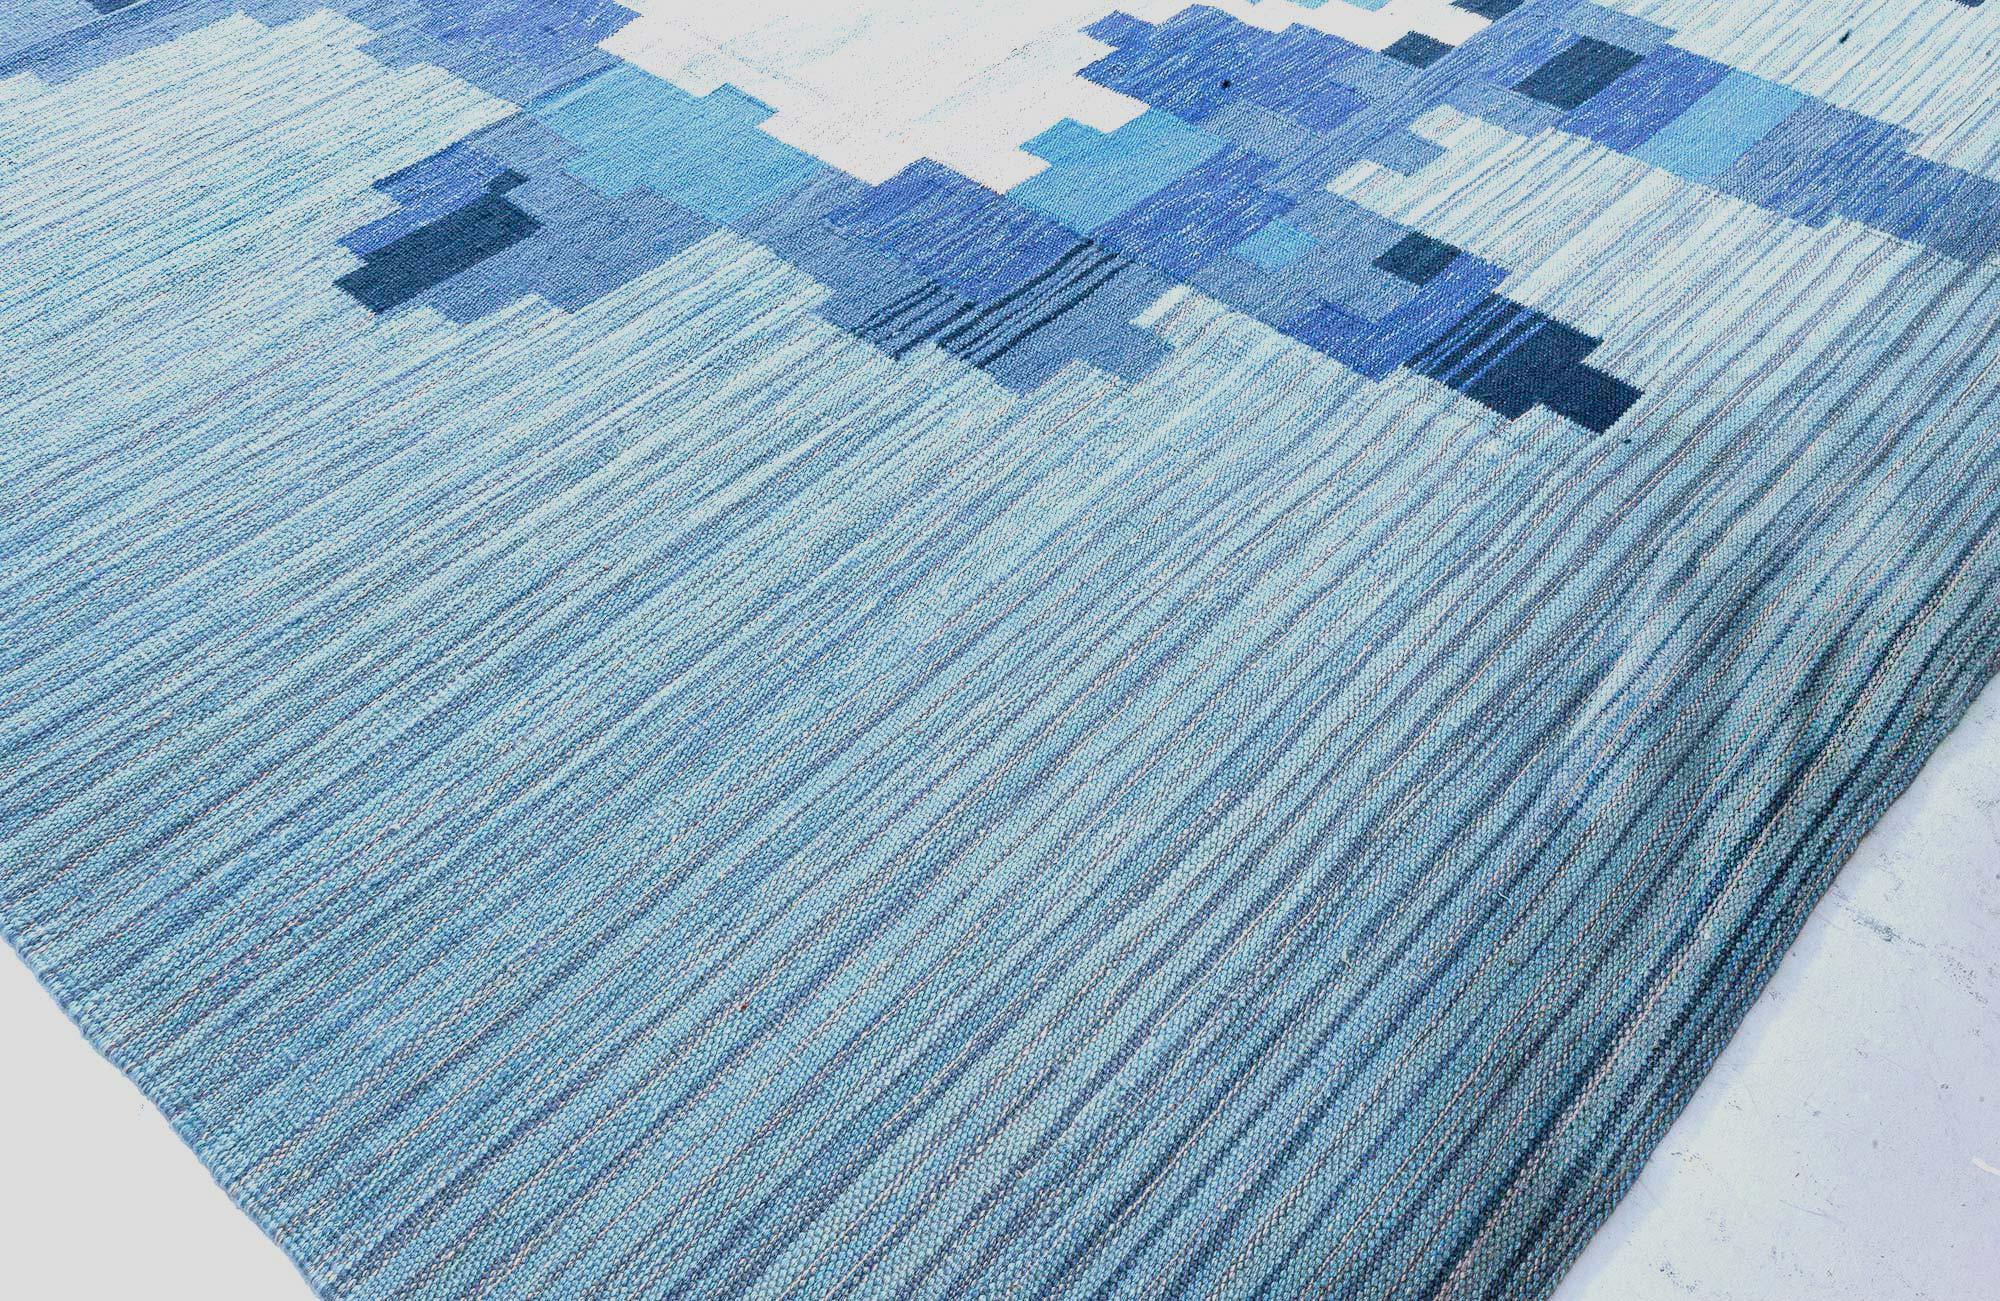 Modern Swedish flat weave rug by Doris Leslie Blau.
Size: 14'1